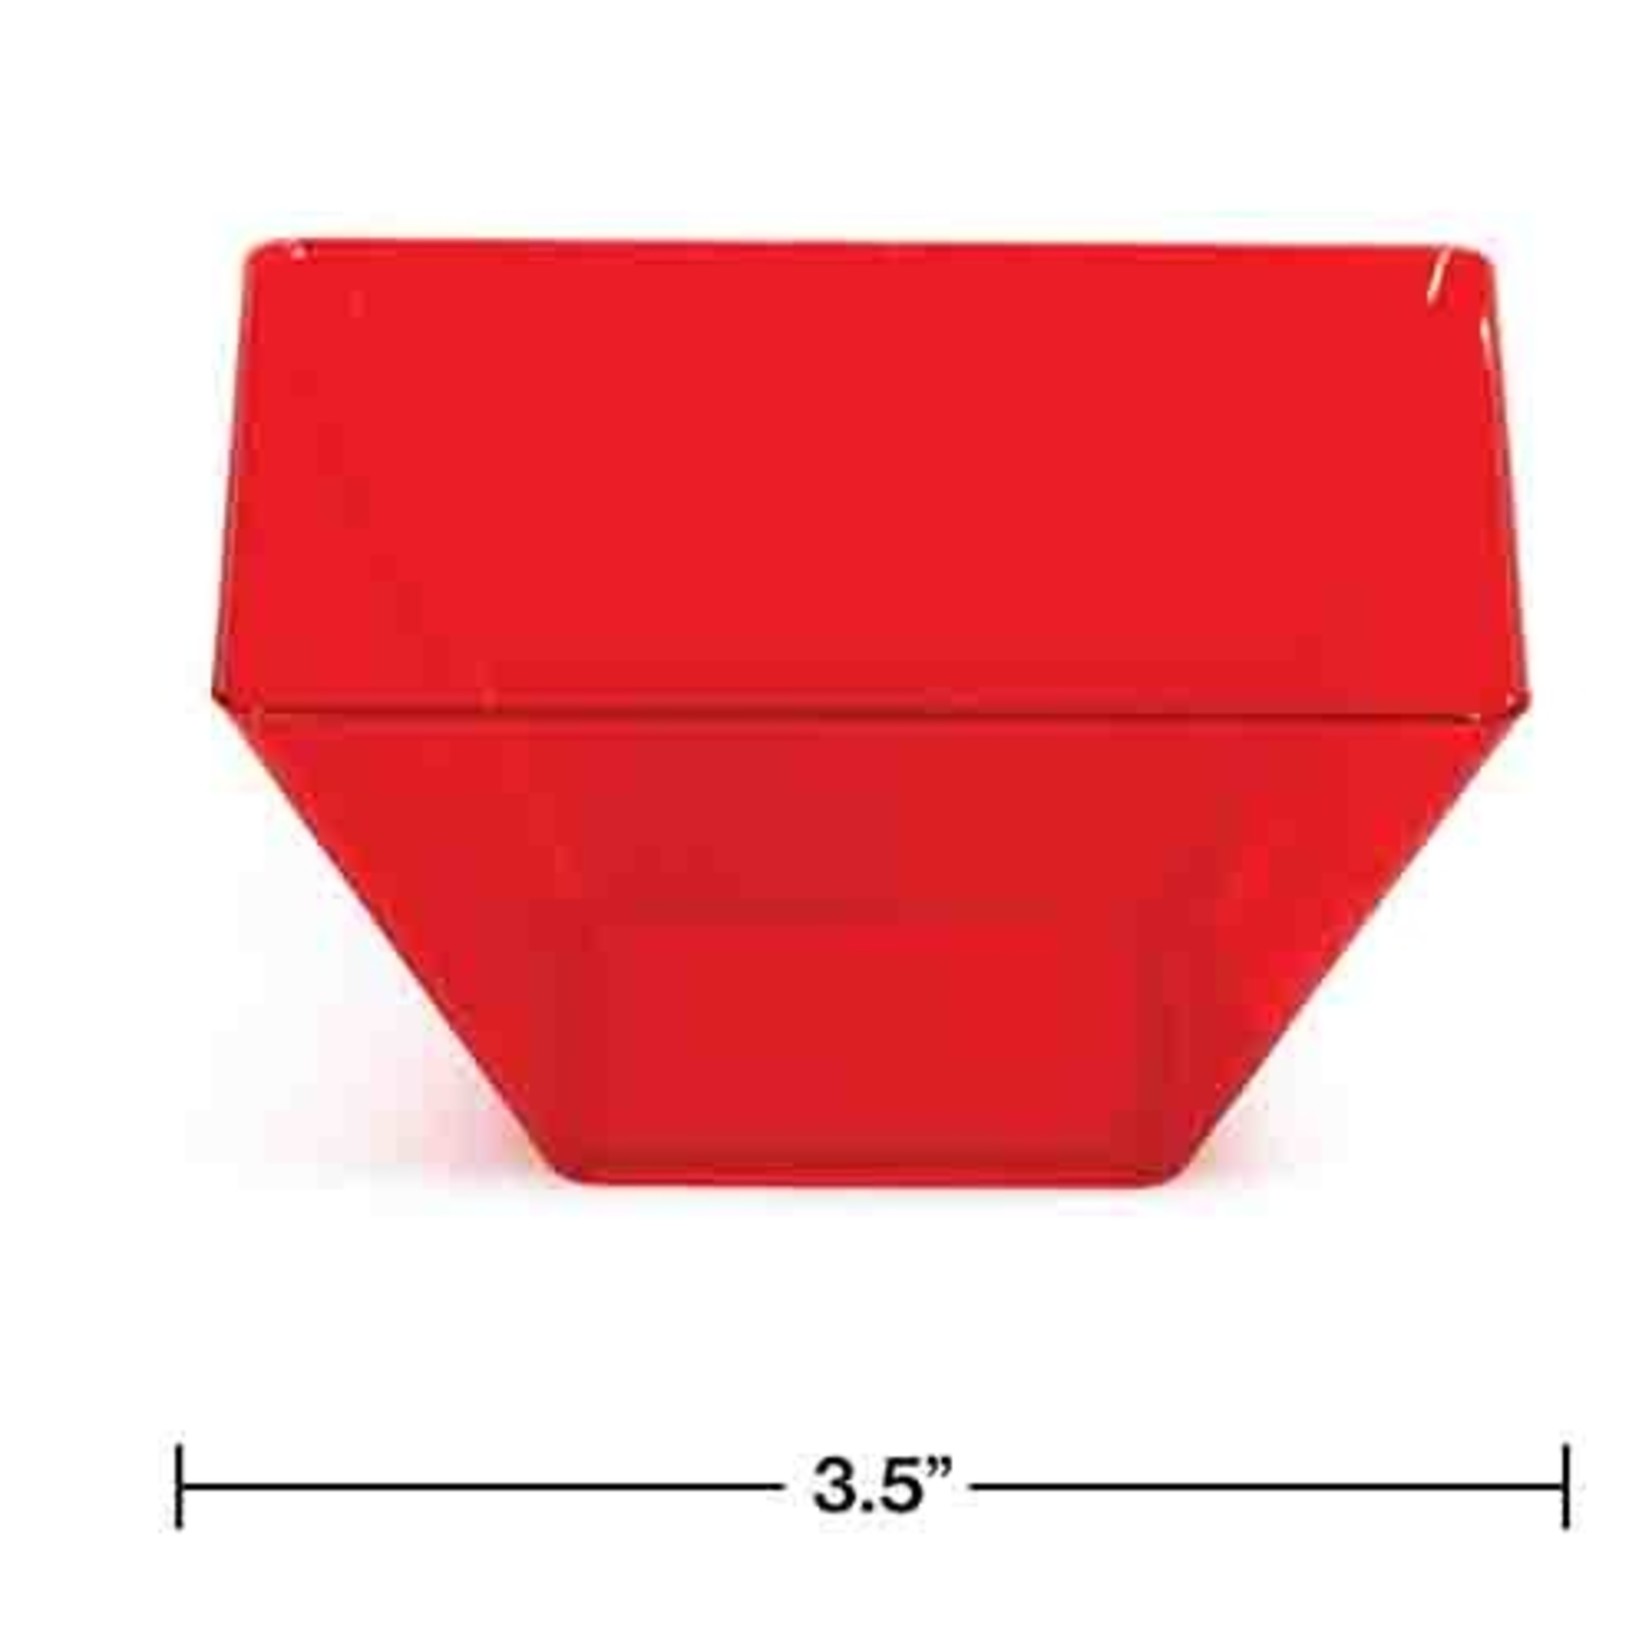 Creative Converting 3.5" Red Plastic Square Bowl - 8ct.